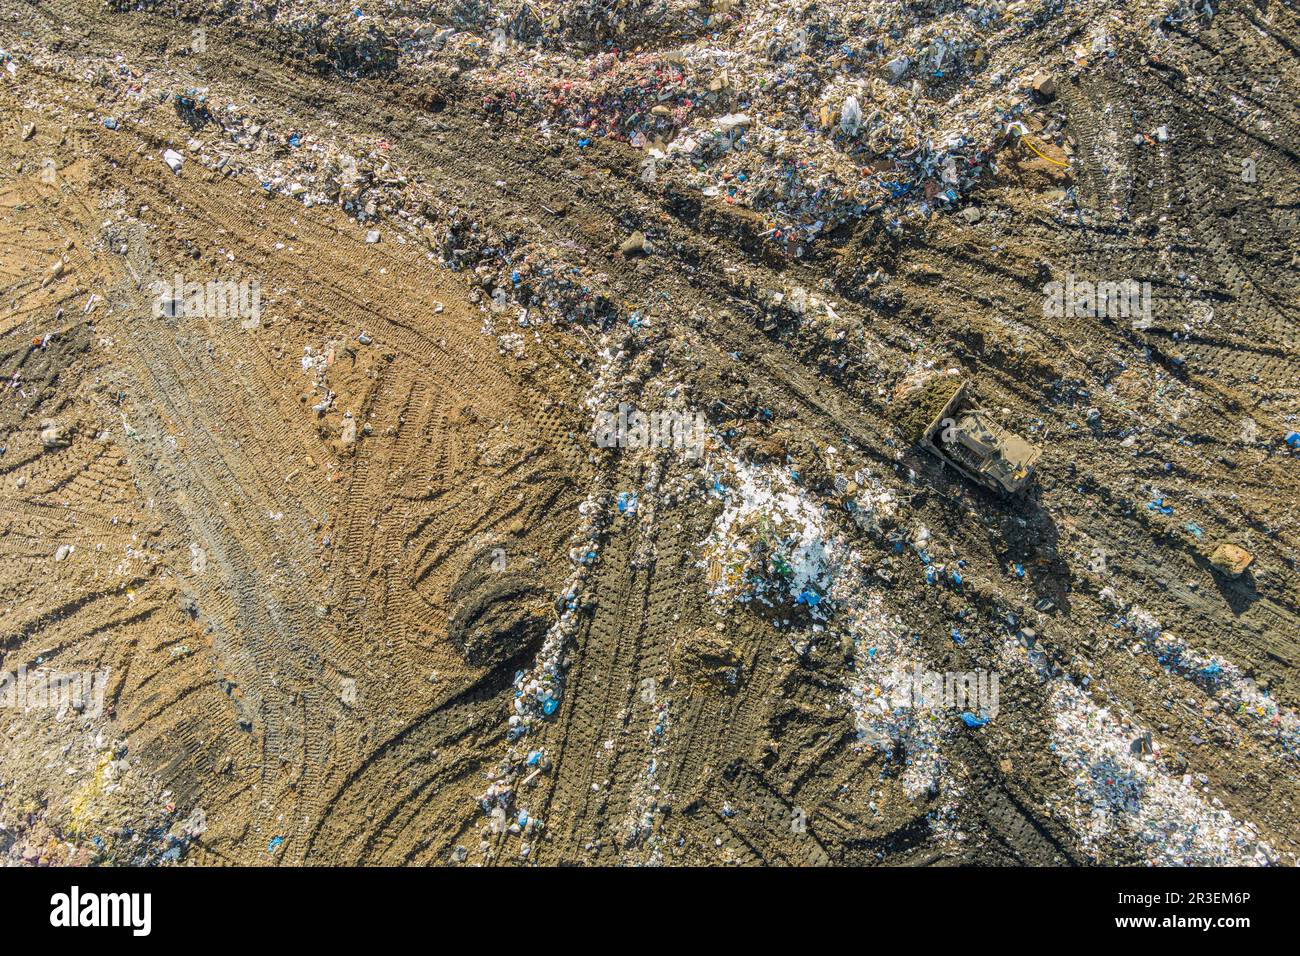 Aerial view of garbage dump landfill municipal waste facility, Pennsylvania, USA Stock Photo